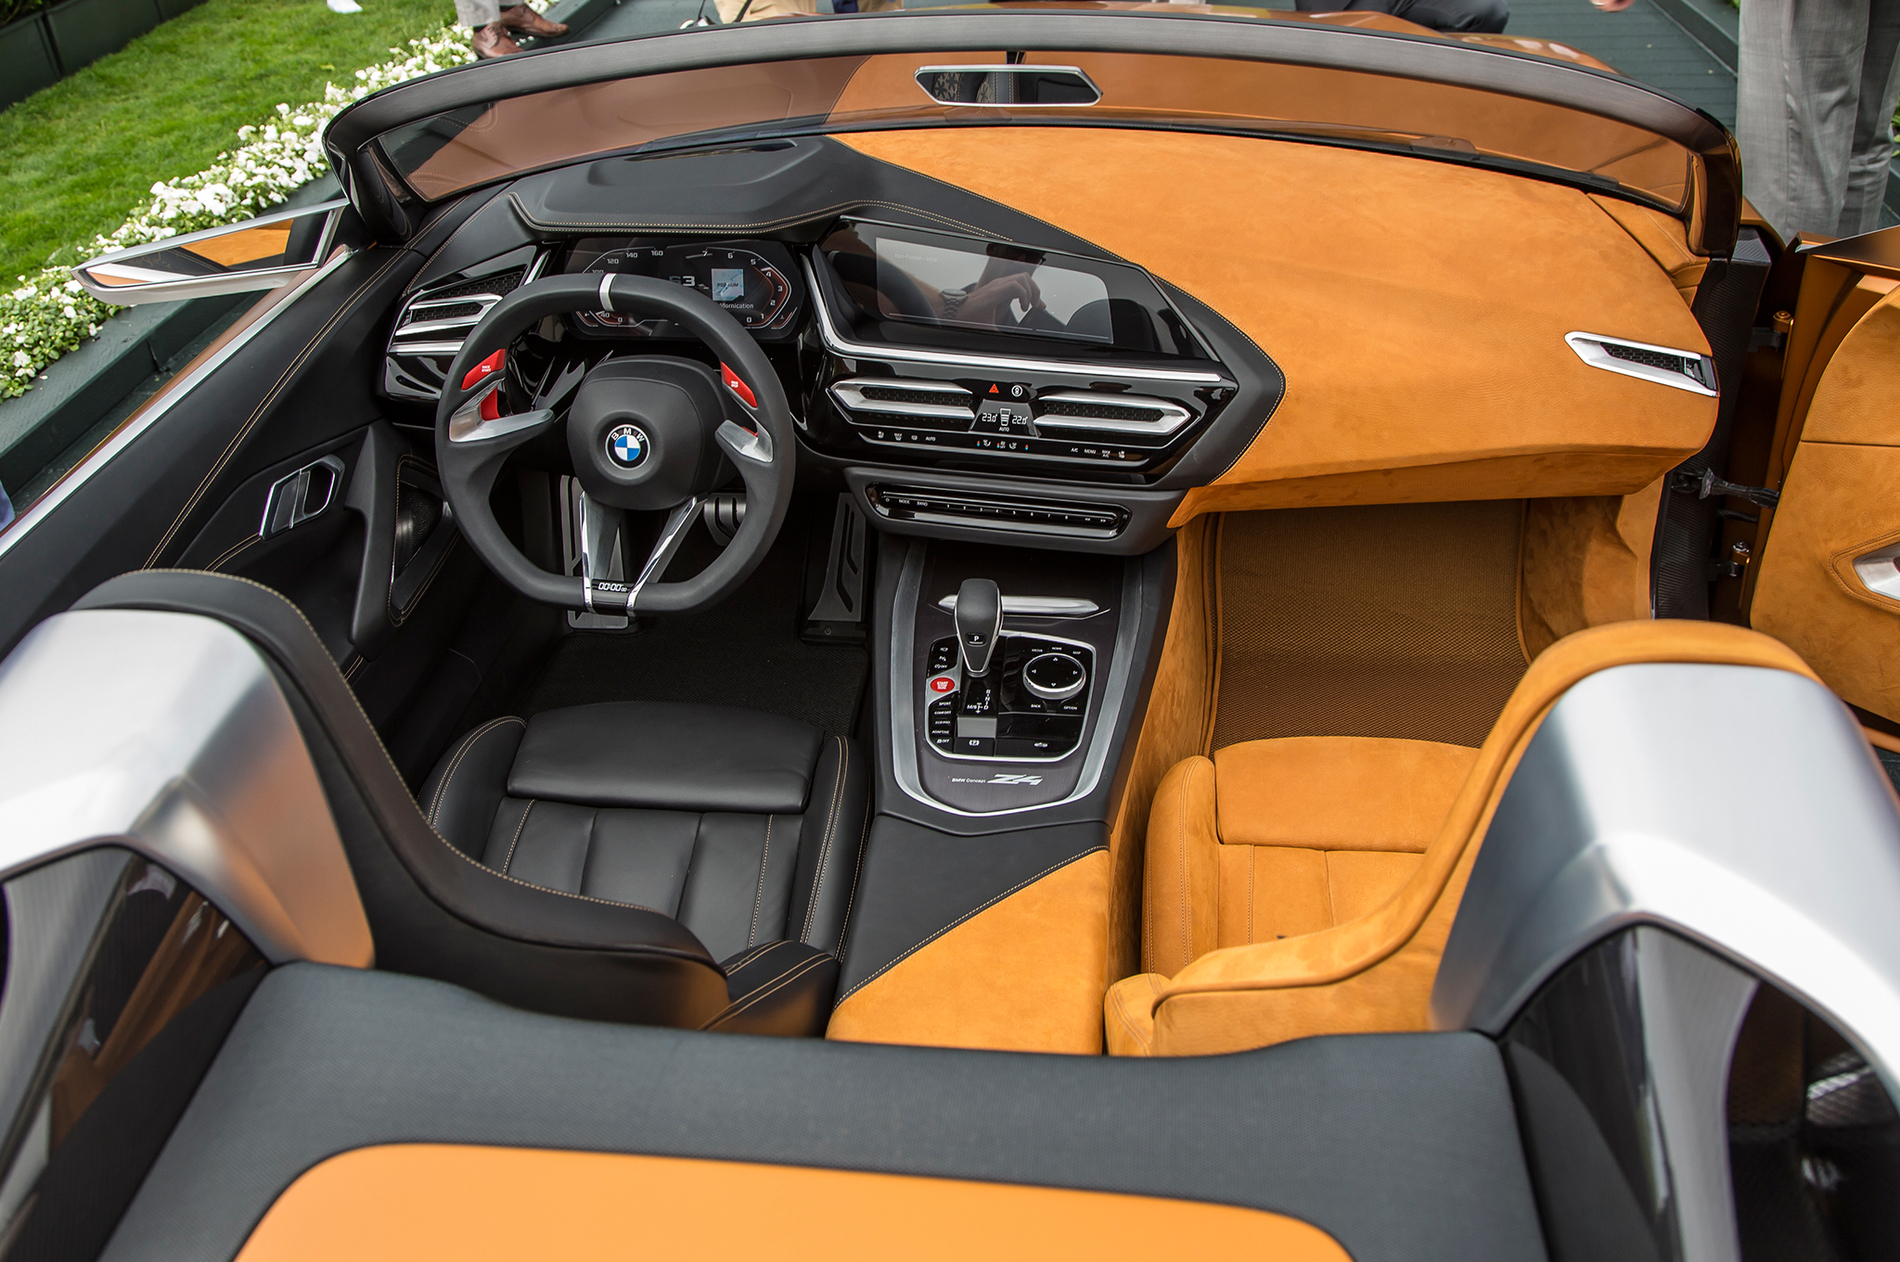 BMW-Concept-Z4-dashboard-automobile-magazine.jpg